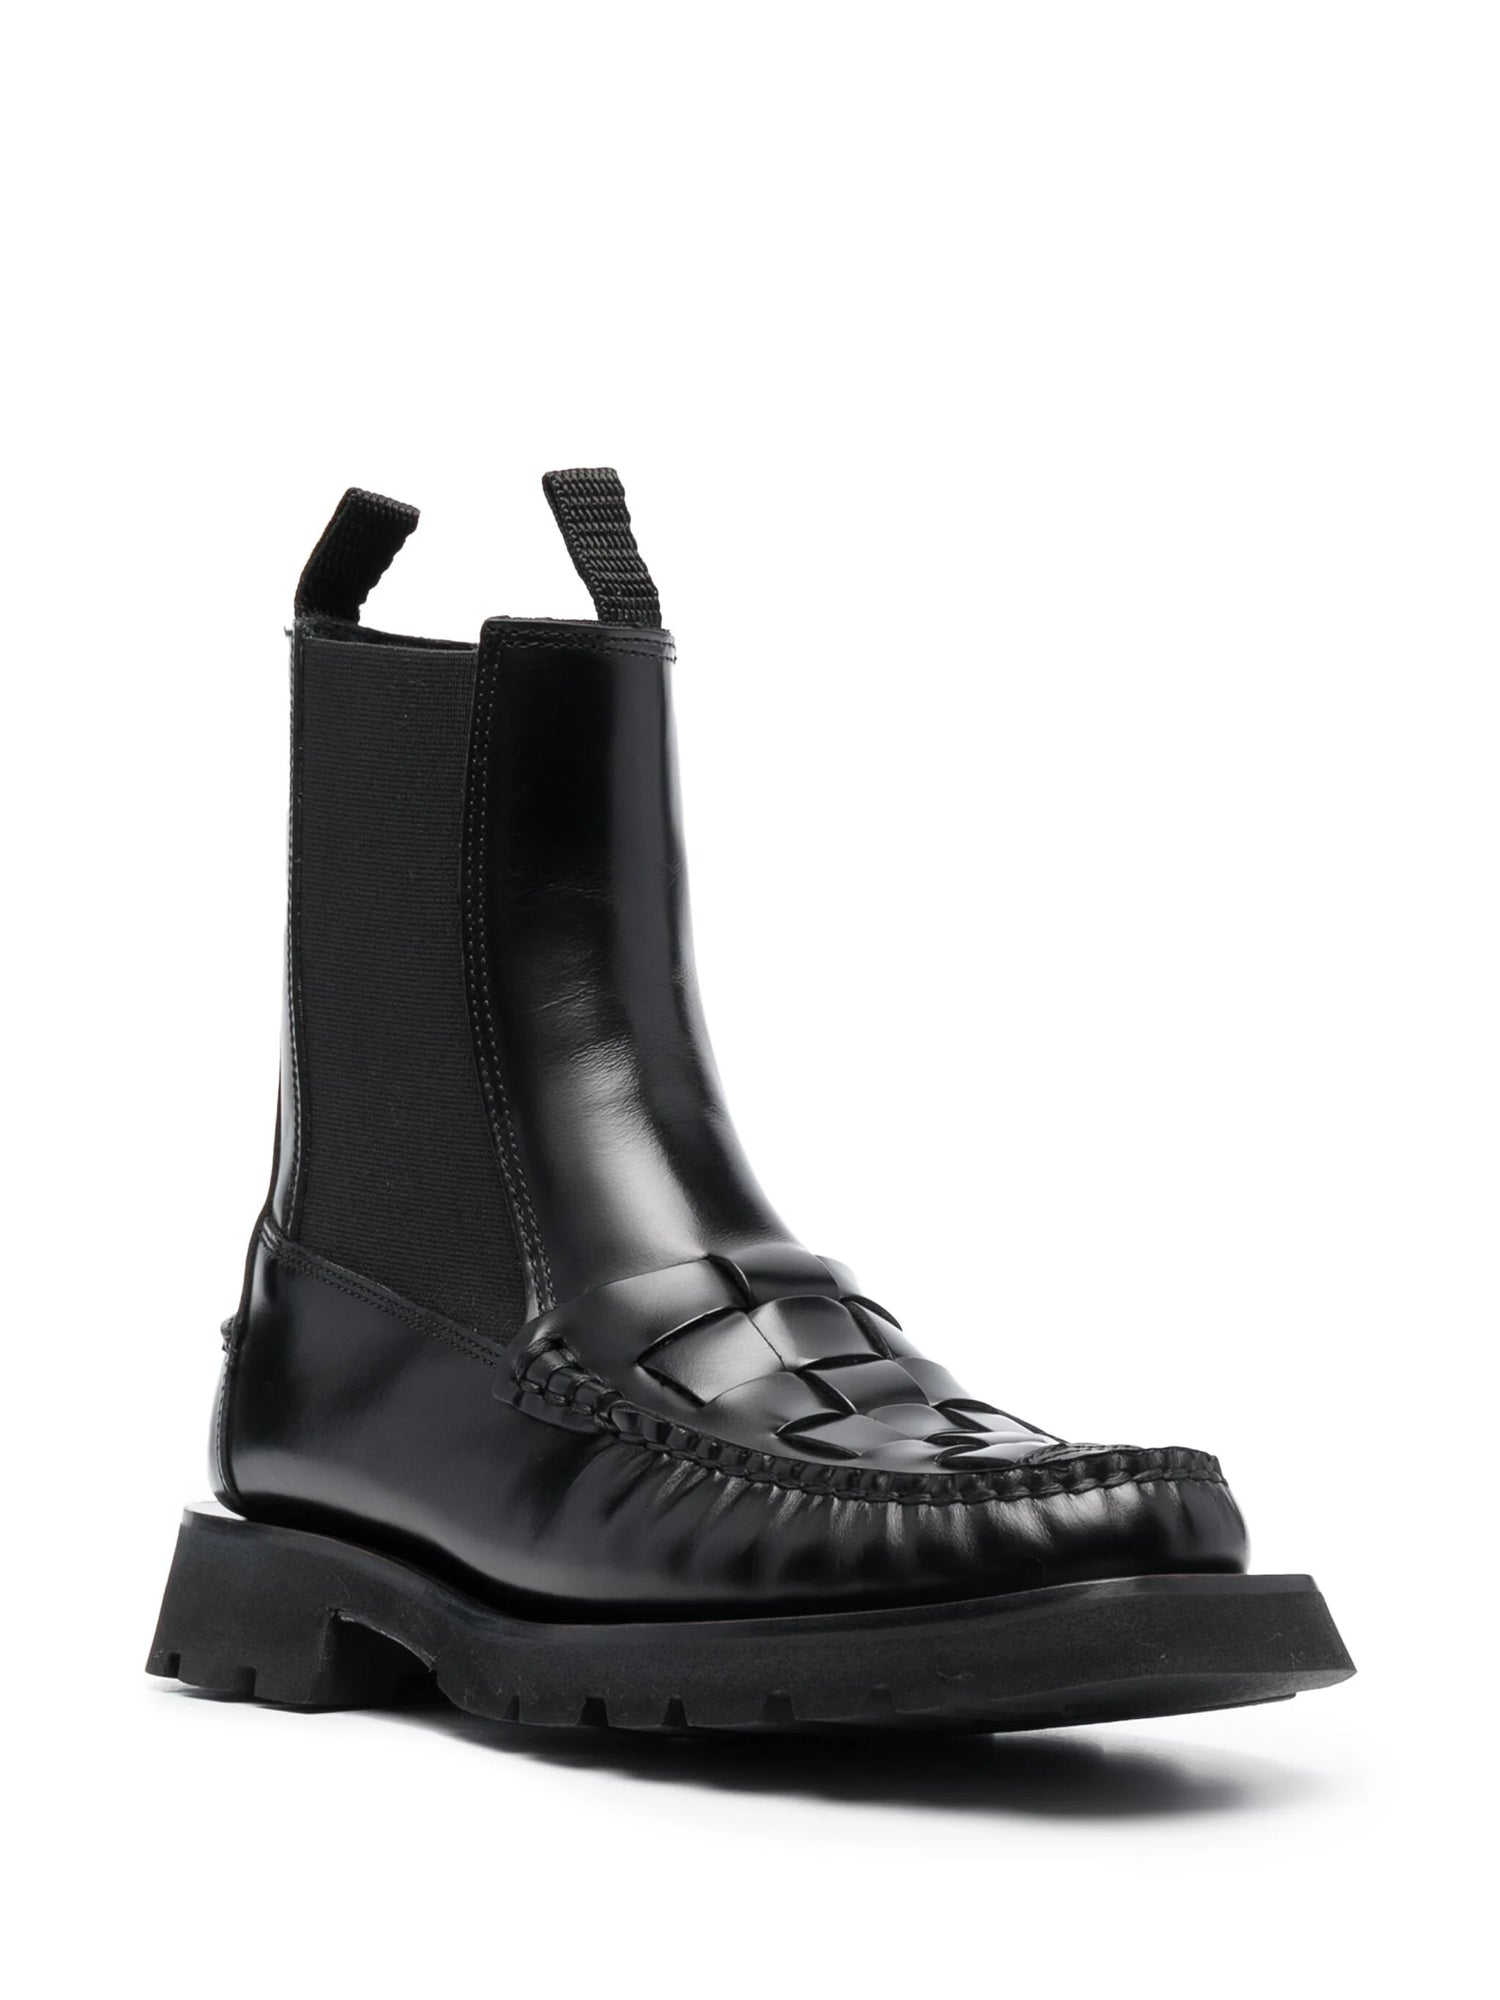 Alda Woven Sport boots, black